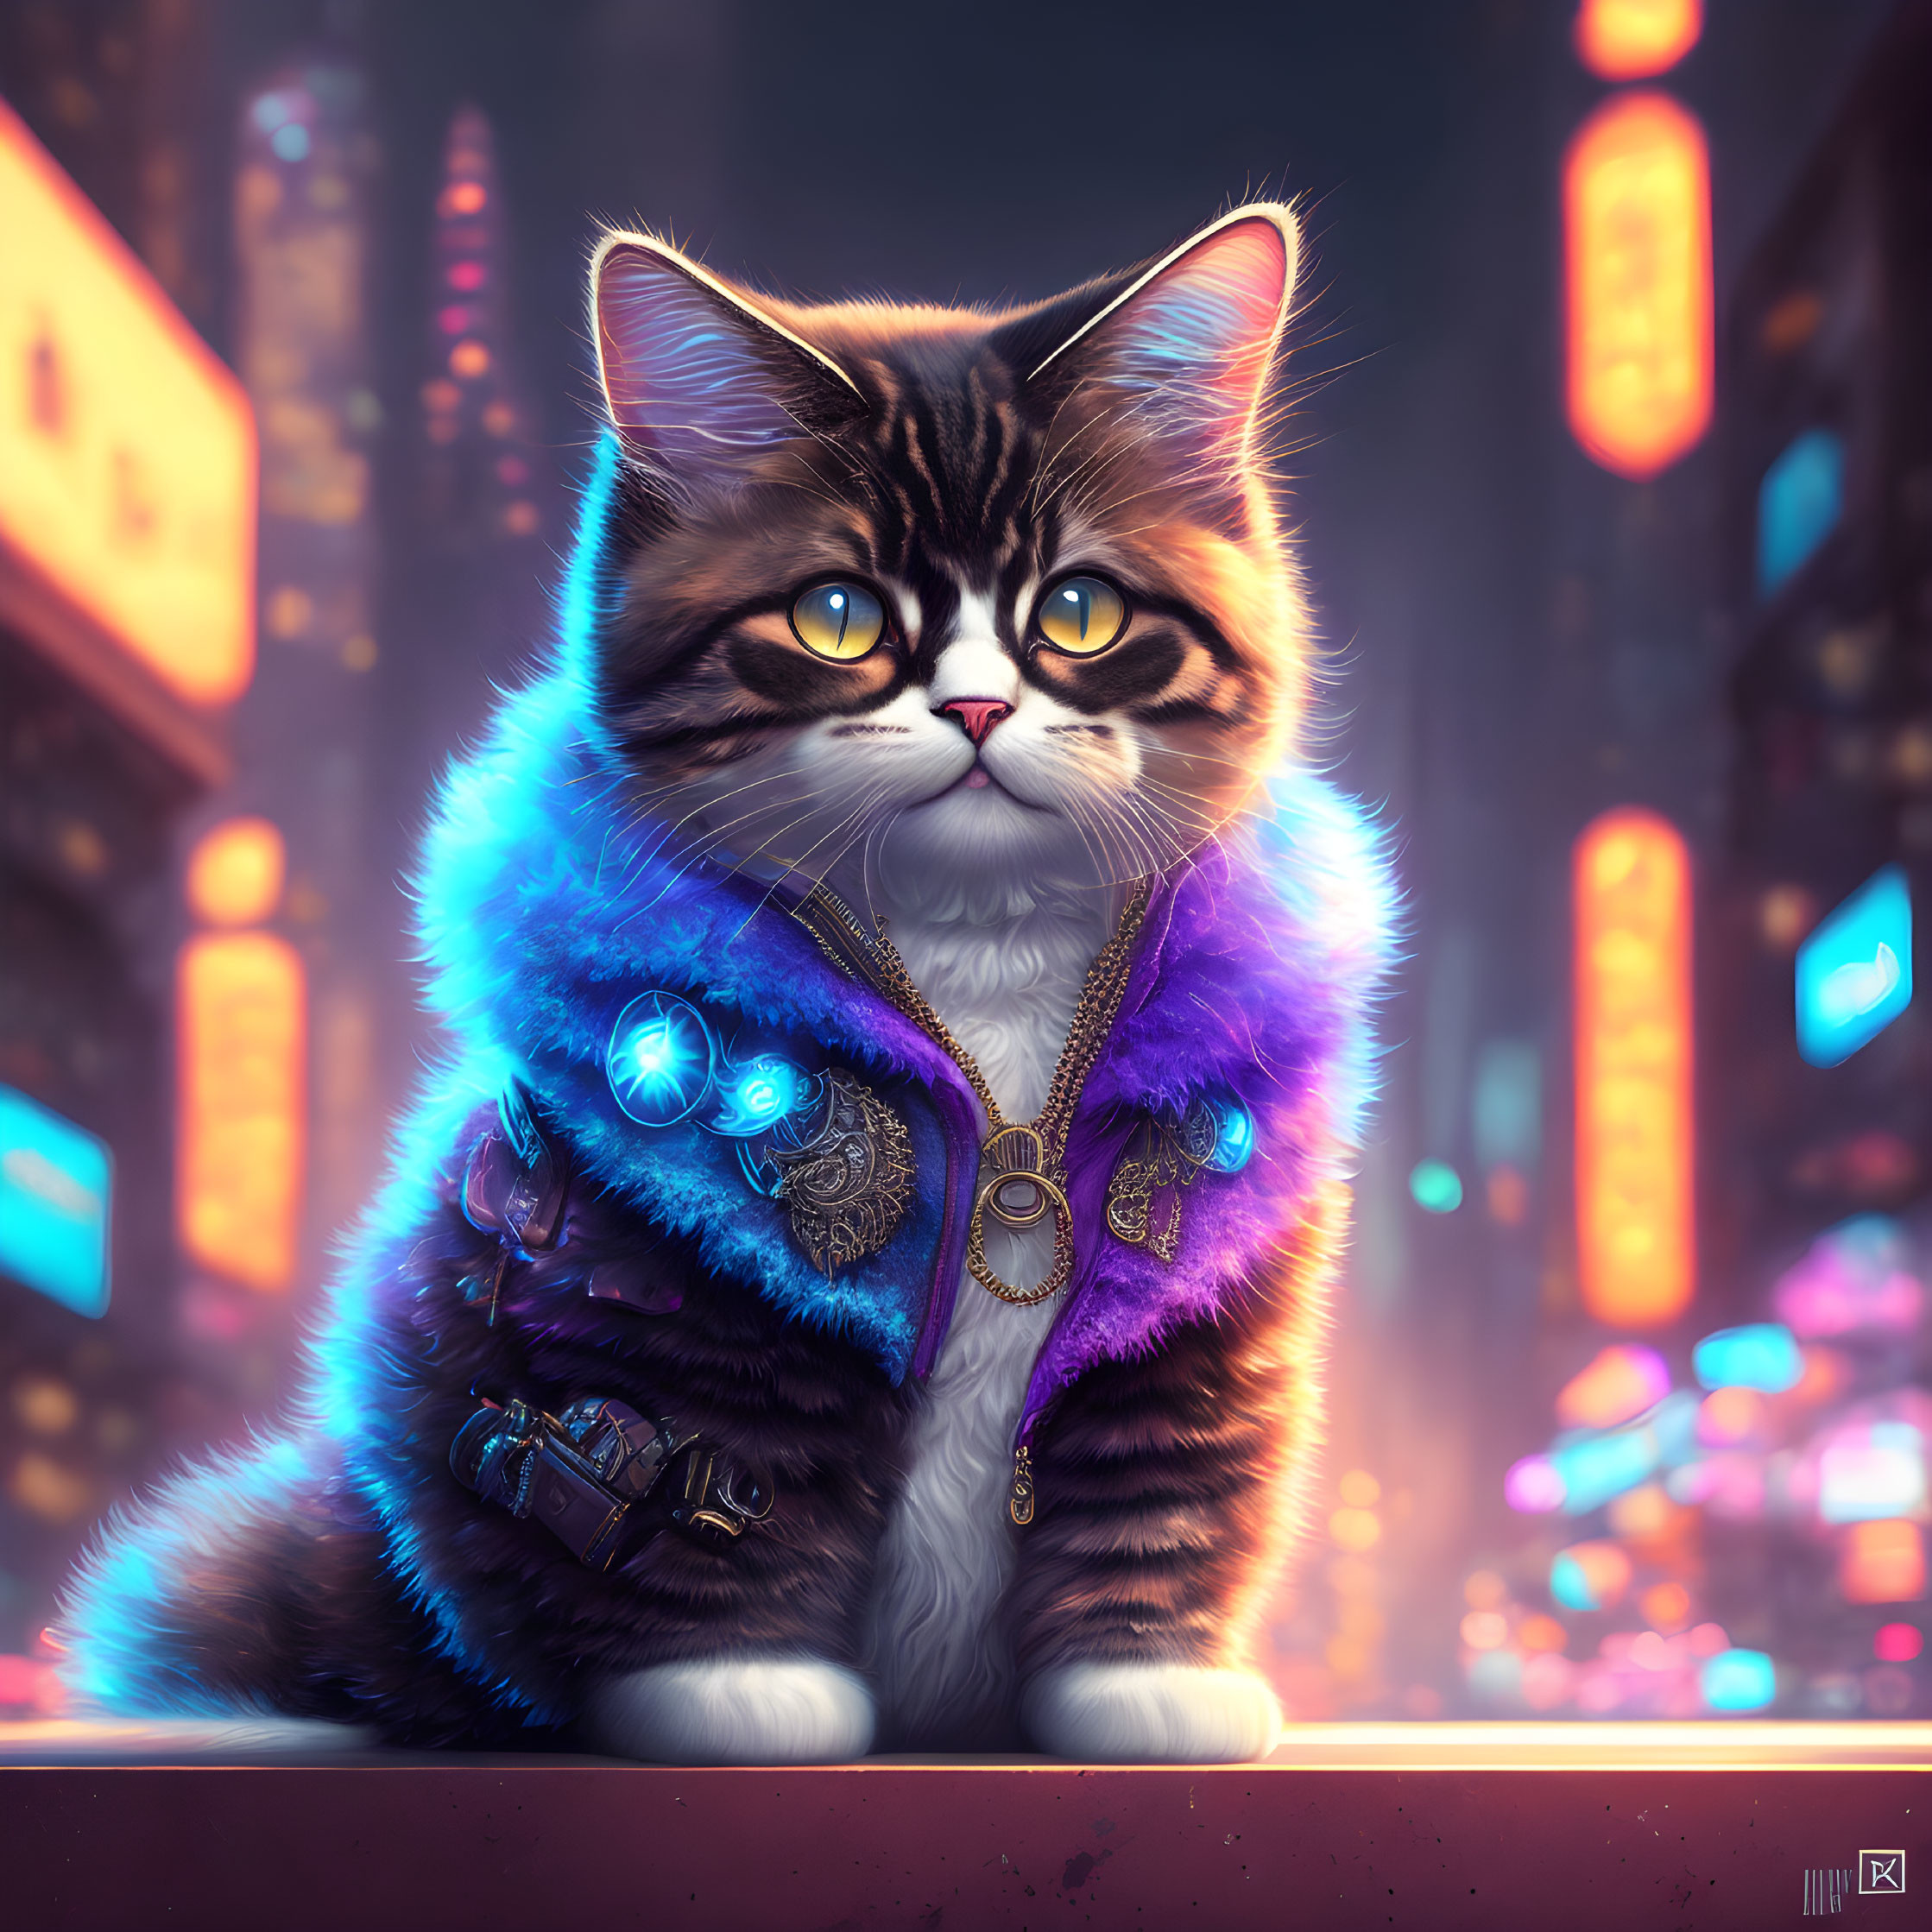 Anthropomorphic Cat in Futuristic Jacket on Neon Urban Background